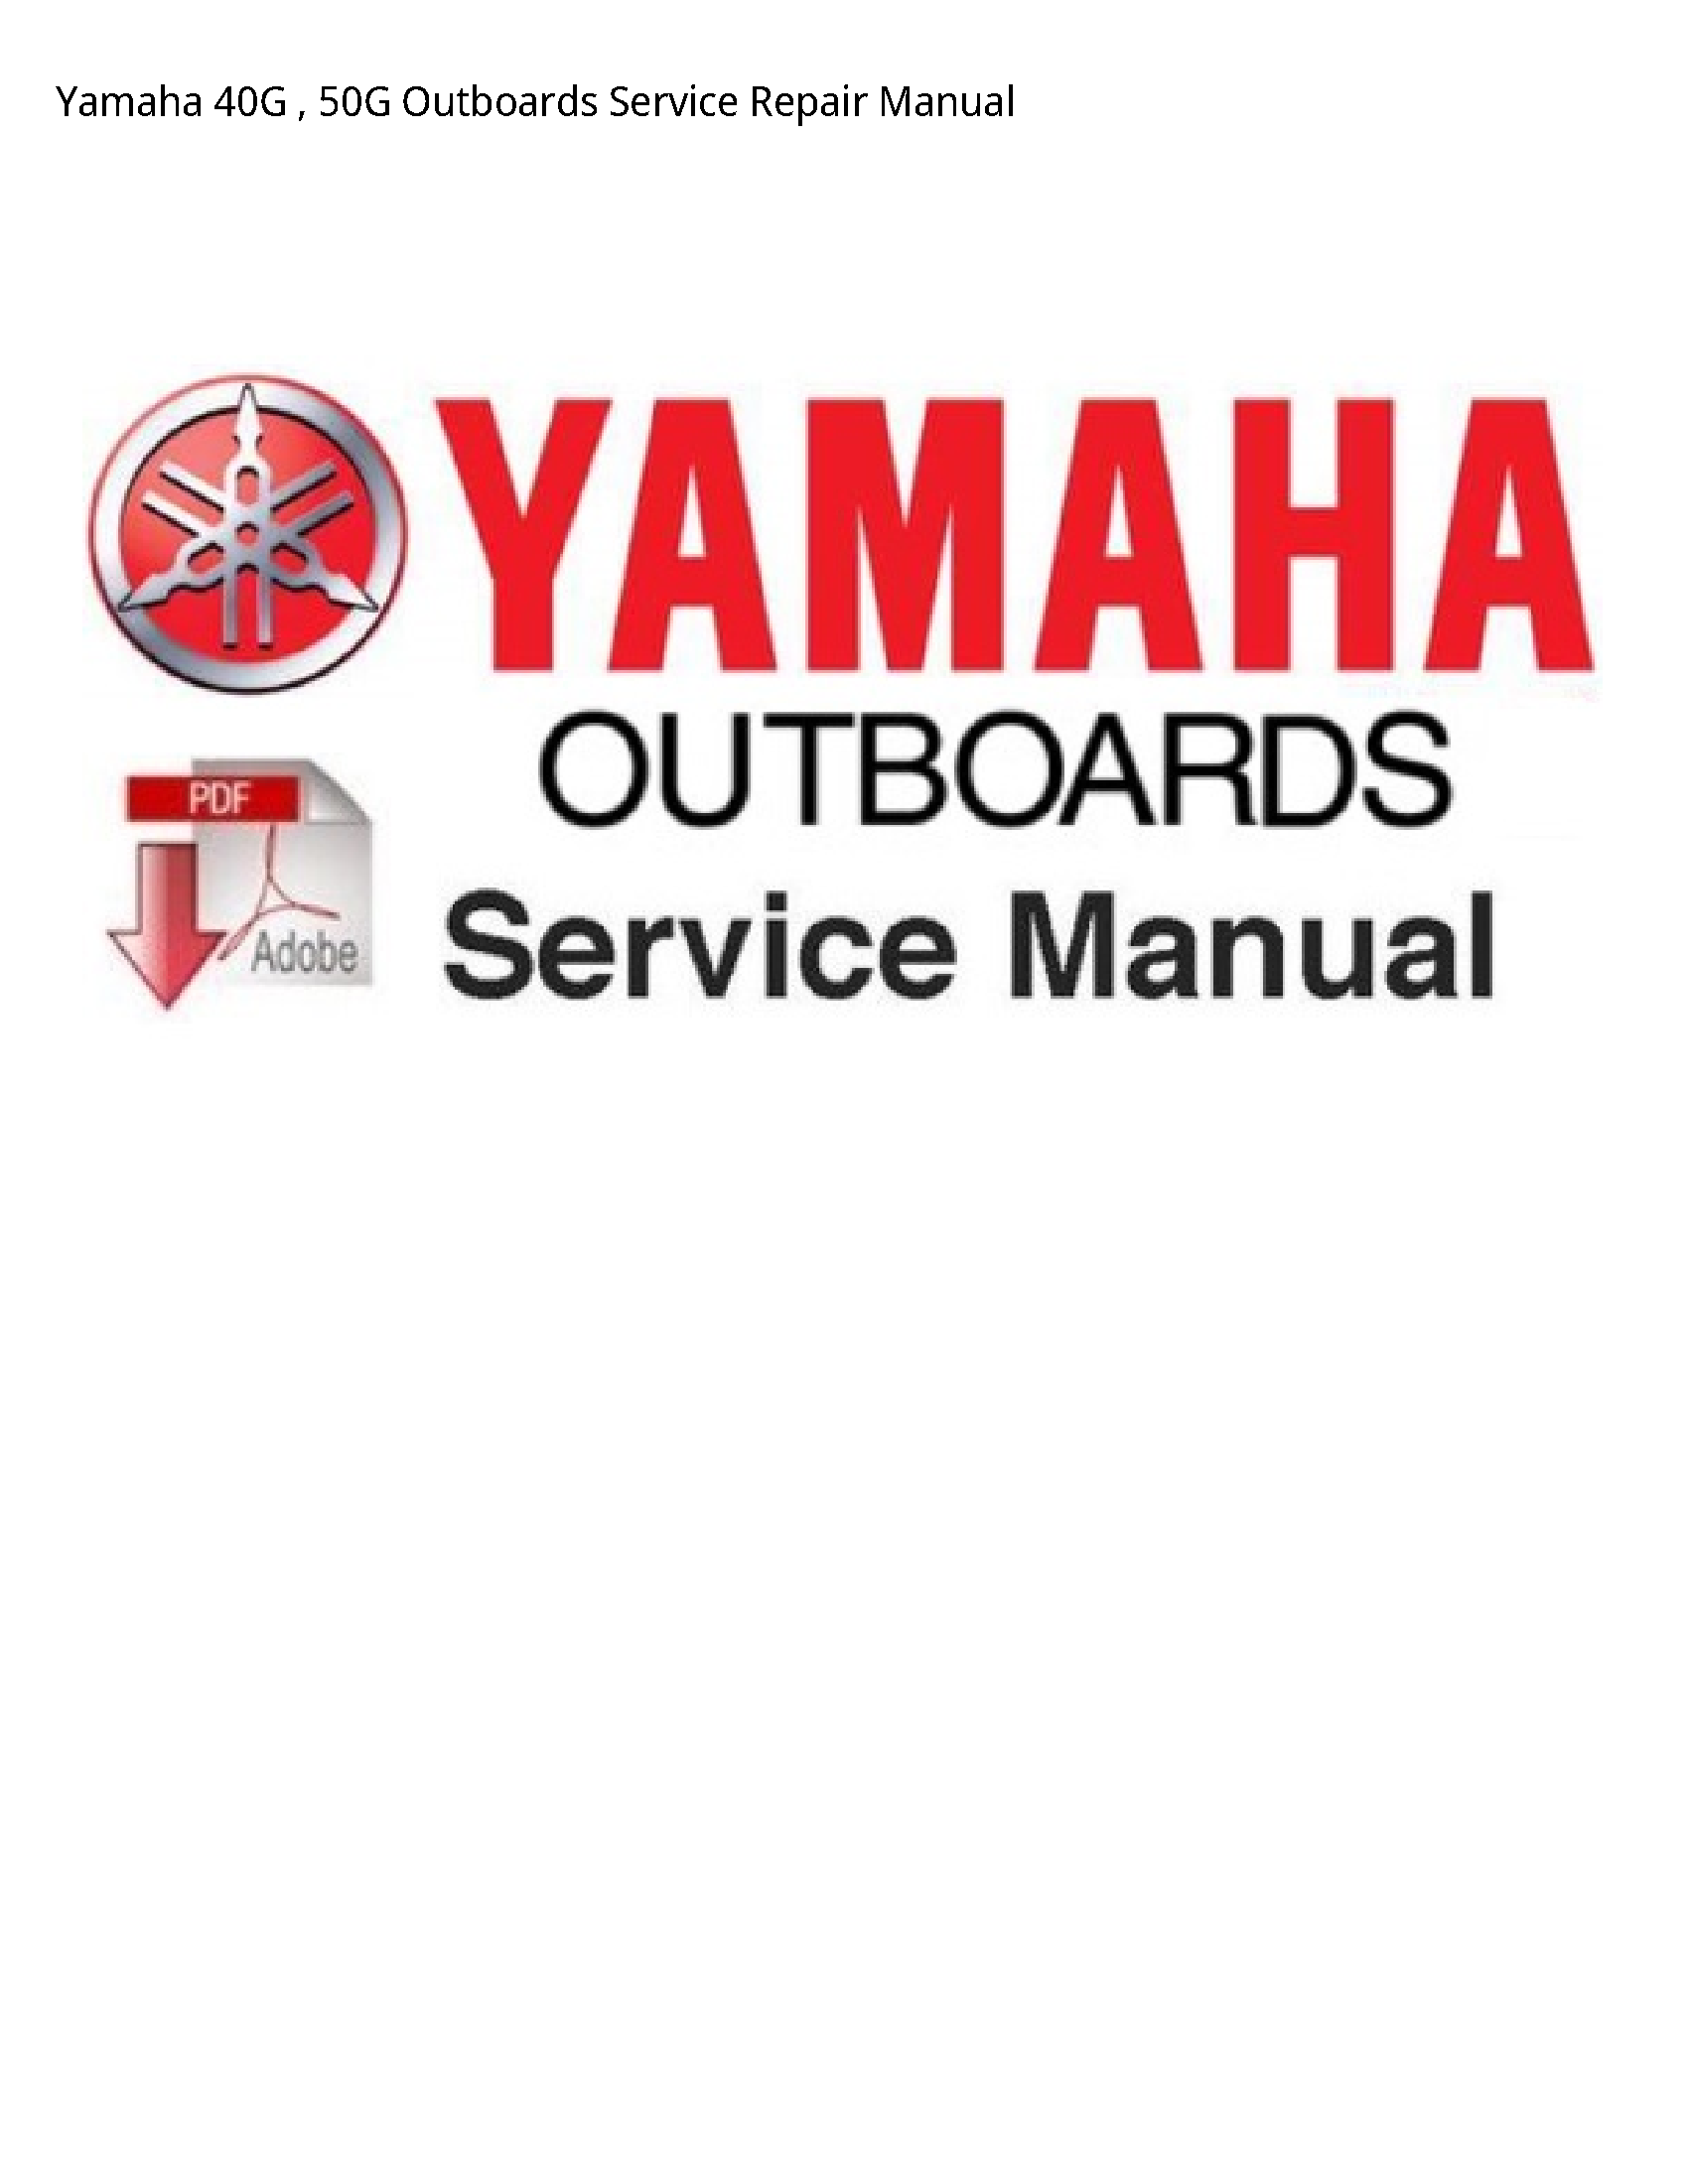 Yamaha 40G Outboards manual